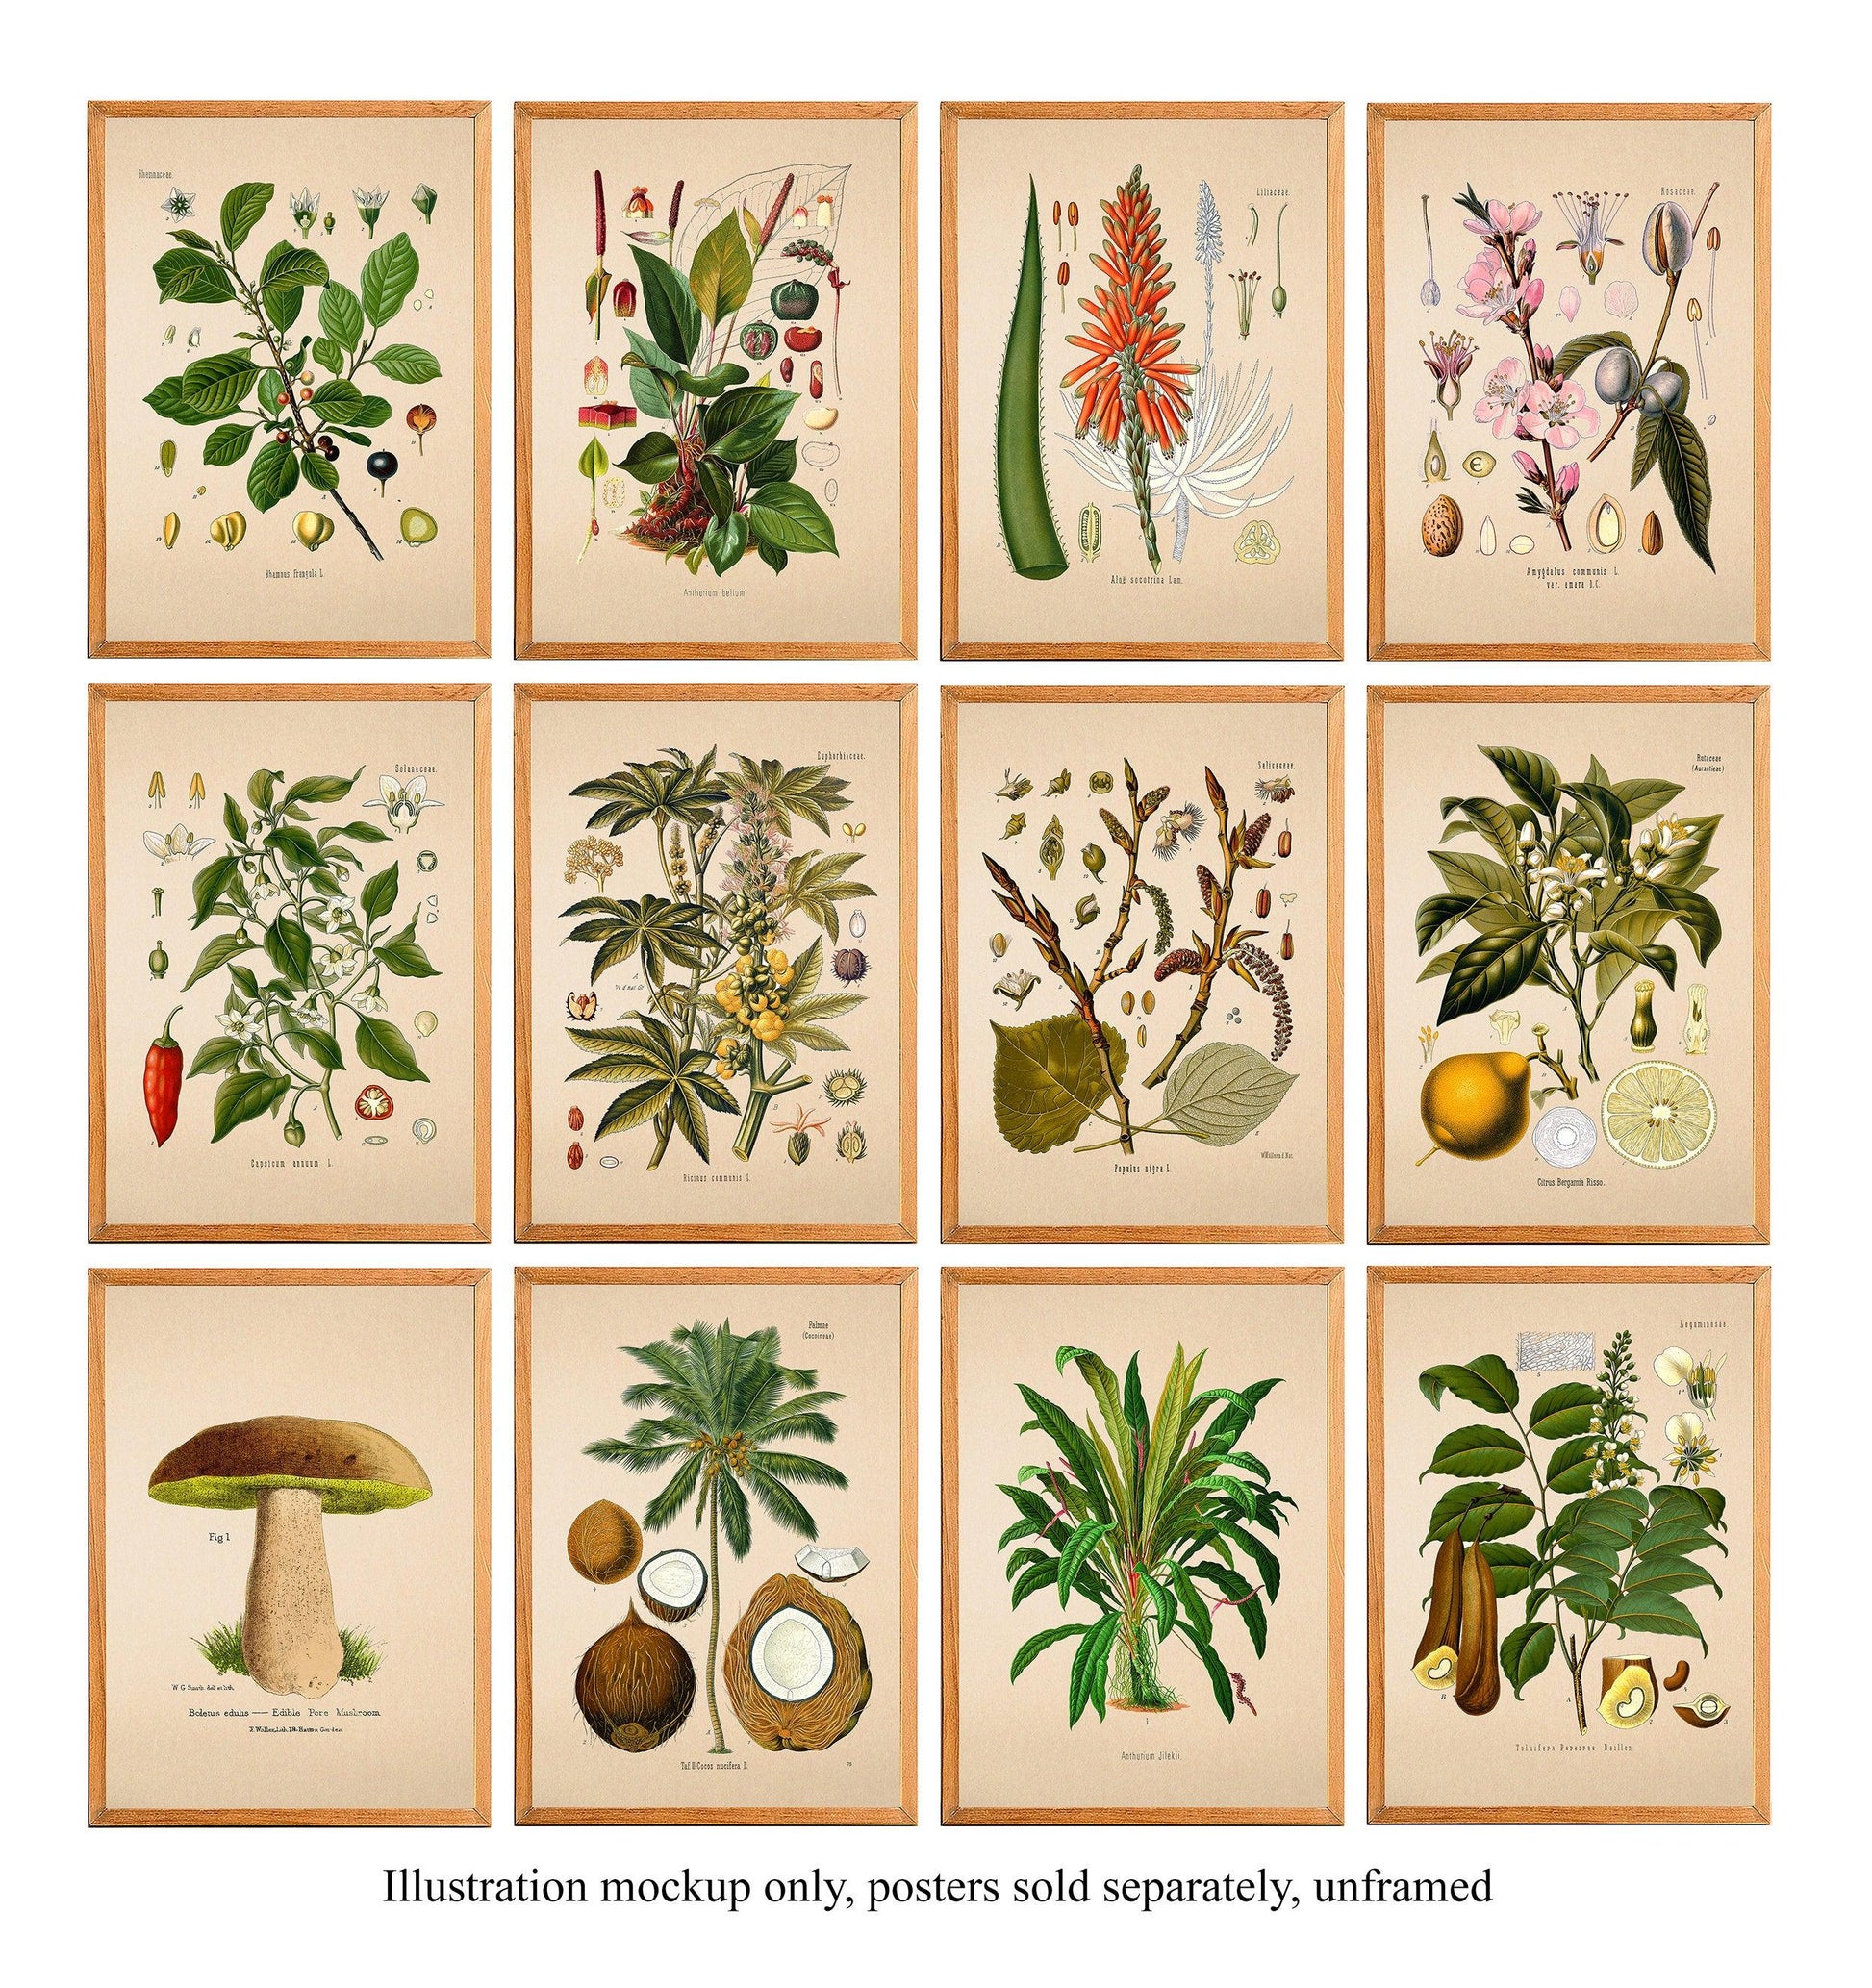 Gladiolus Phoebus - Antique Flower Poster - Classic Posters